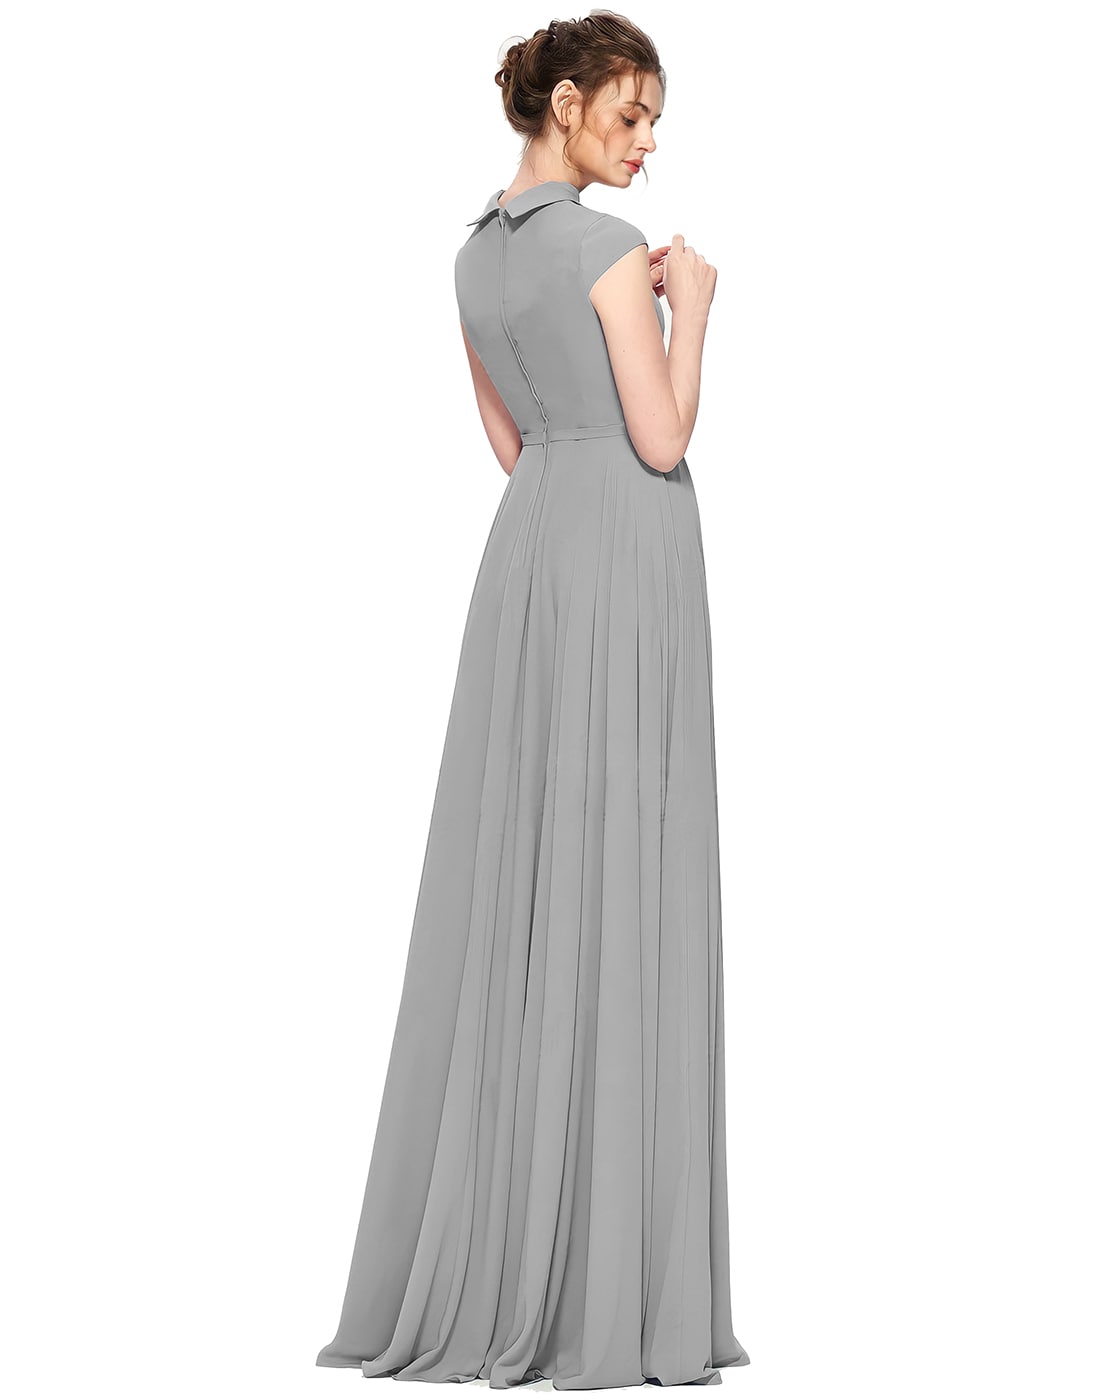 OSTTY - Luxury Grey Wedding Dress Long Sleeve V Neck Ball Gown Crystal  Dresses OS2211 $899.99